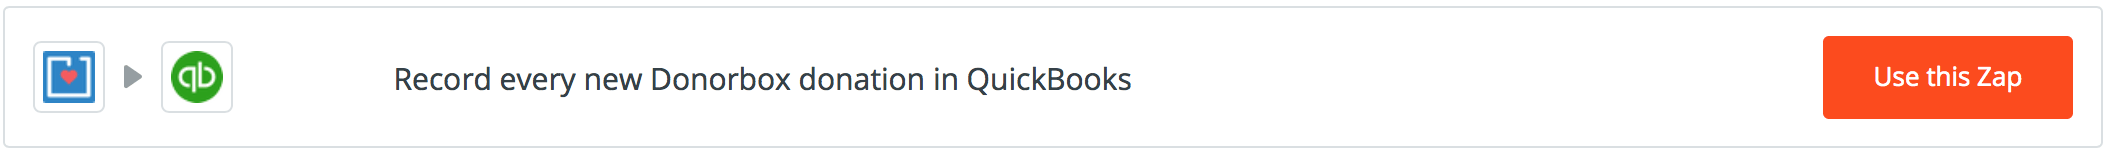 Donorbox Quickbooks integration via Zapier